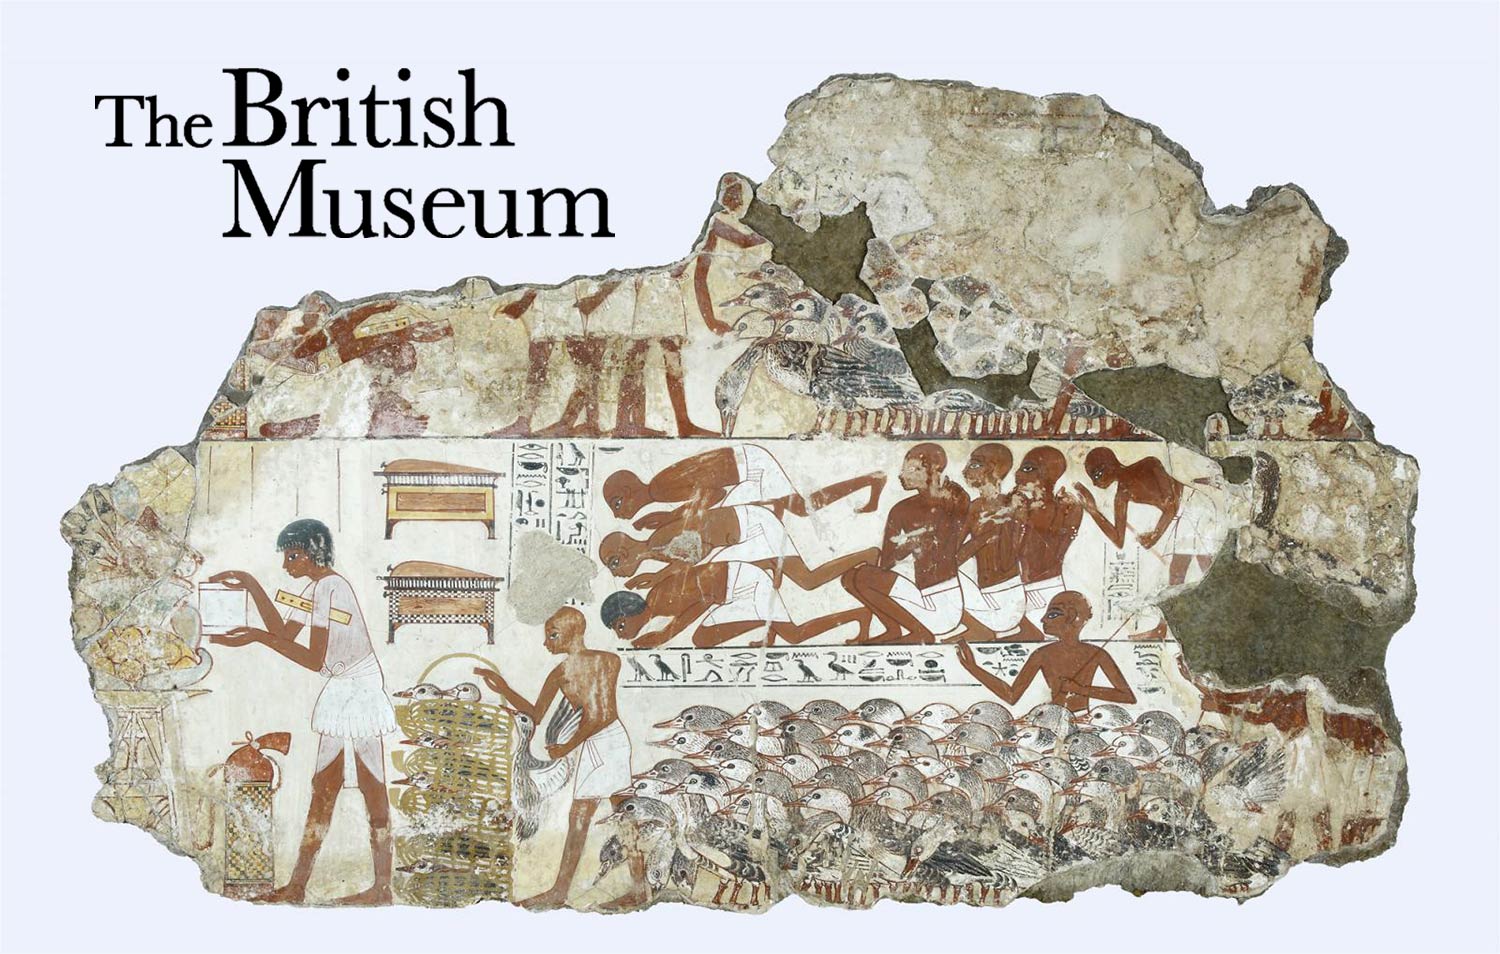 The British Museum online